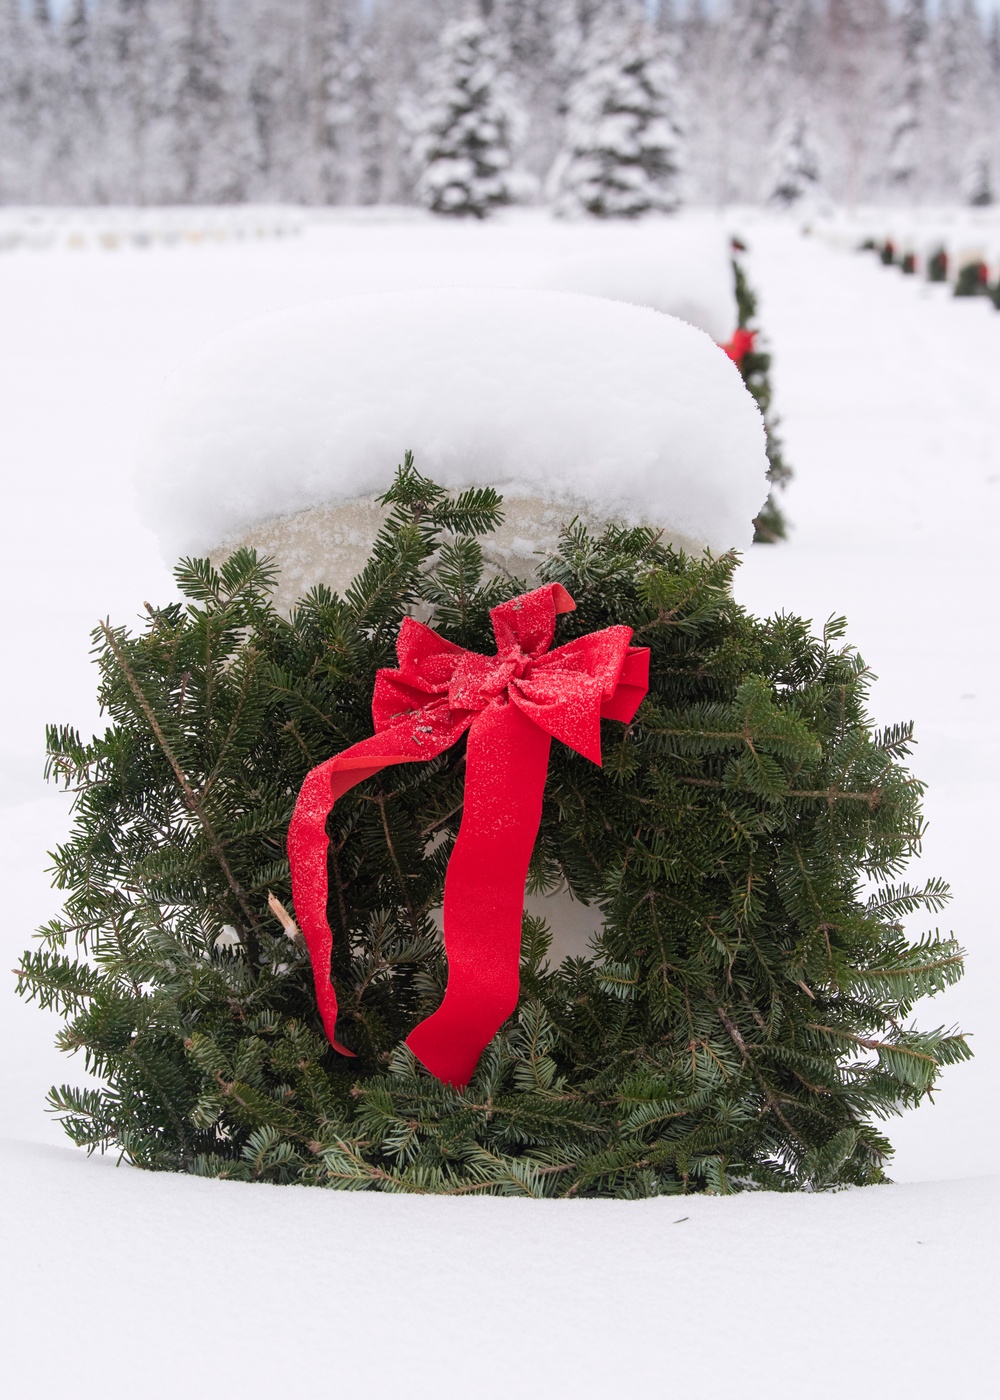 JBER hosts Wreaths Across America ceremony